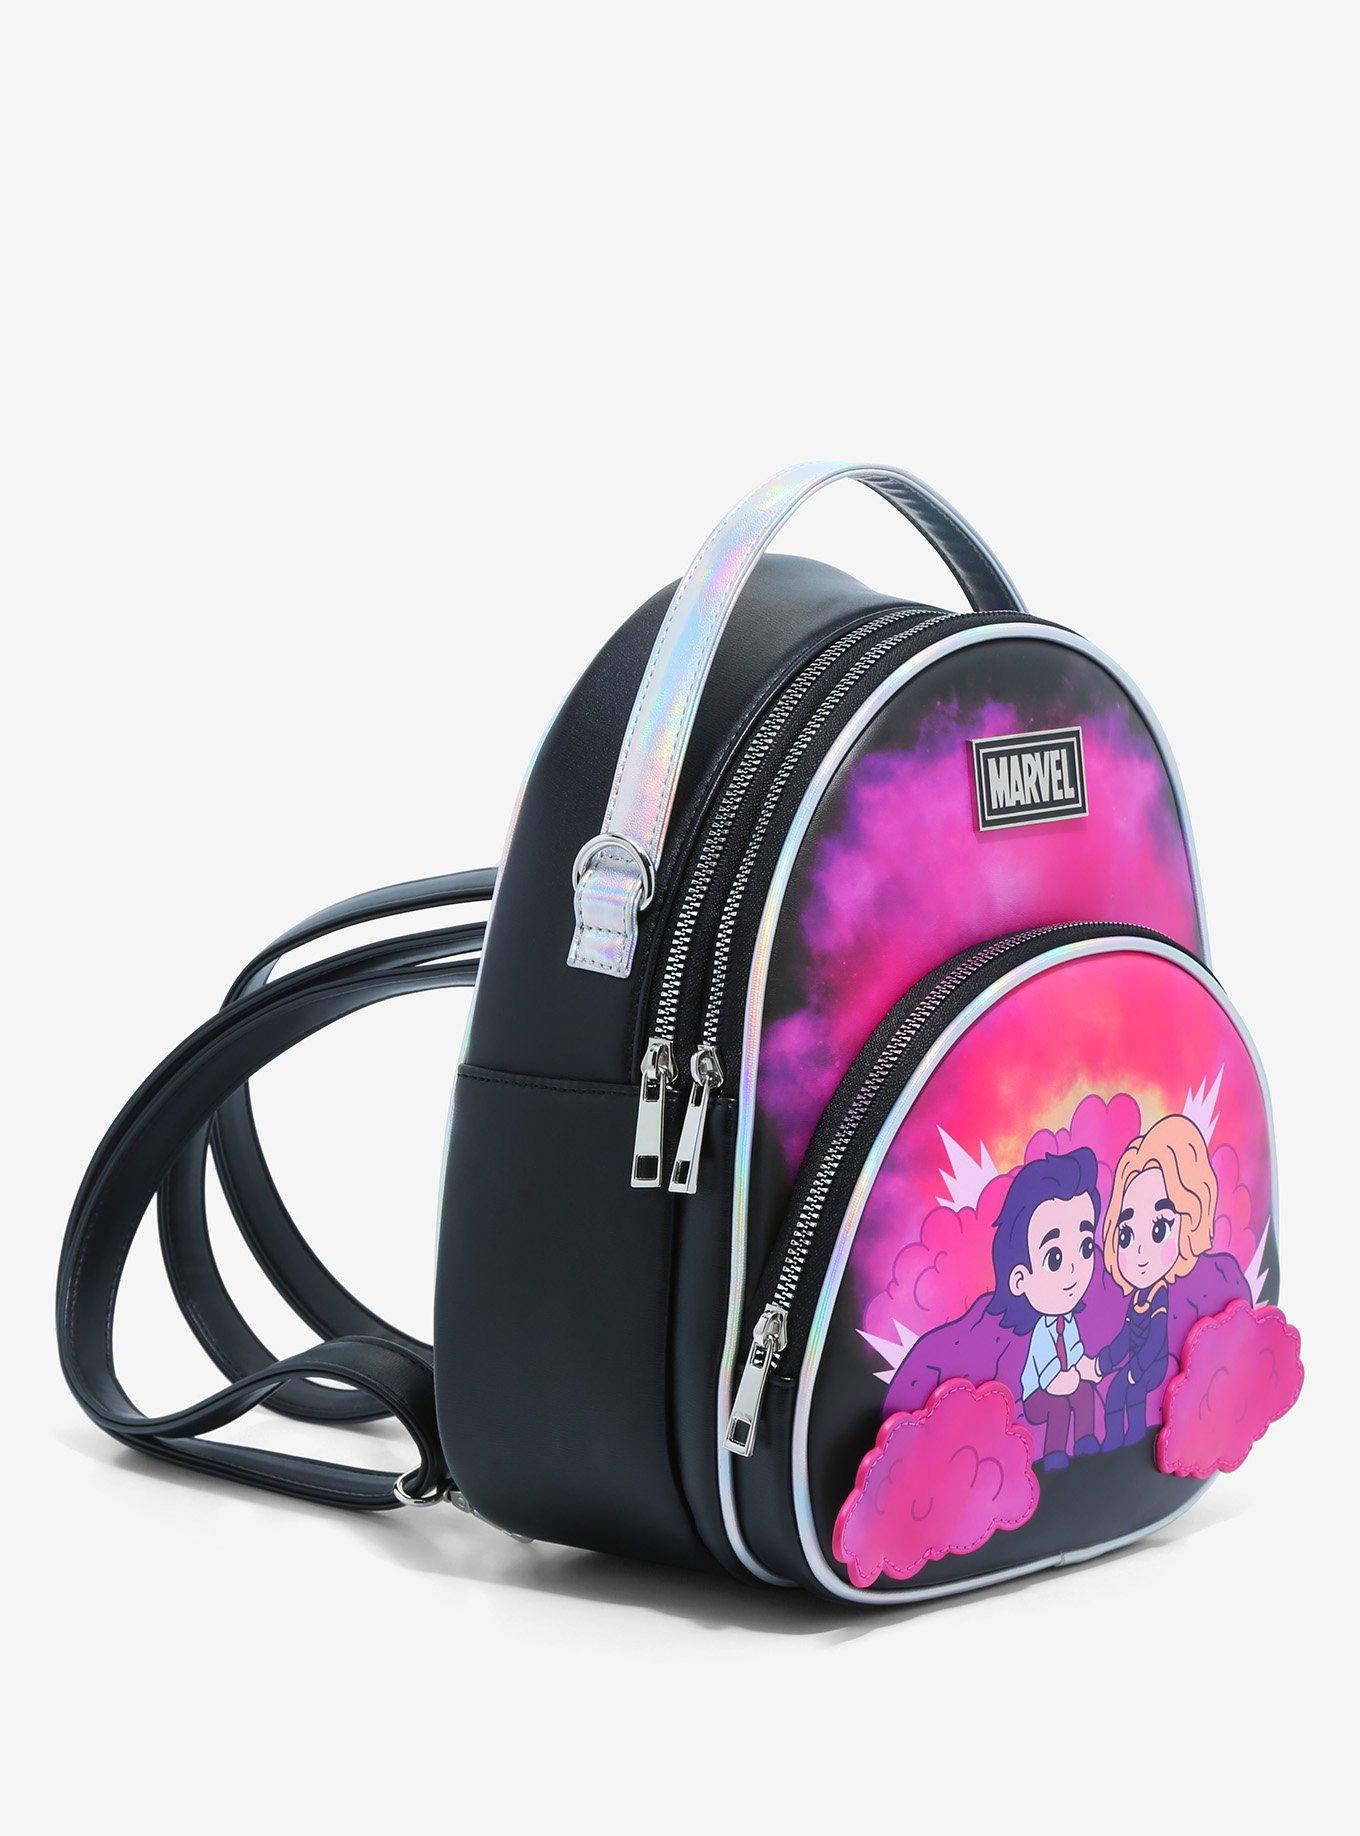 Marvel Loki Sylvie & Loki Cloud Convertible Mini Backpack - BoxLunch  Exclusive